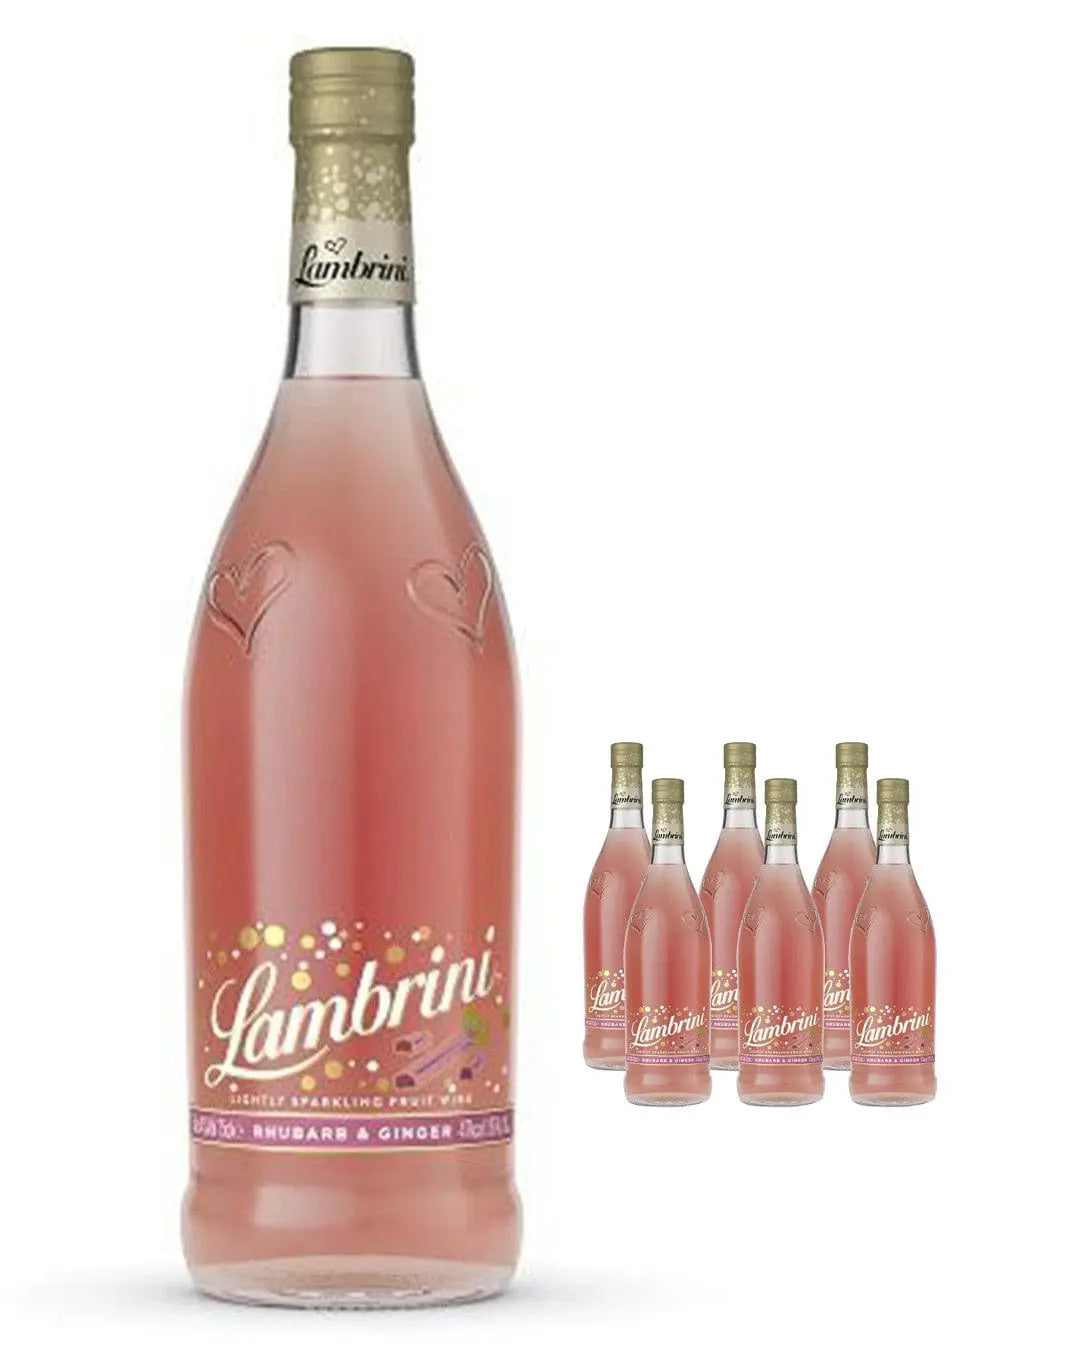 Lambrini Rhubarb & Ginger Slightly Sparkling Fruit Wine Case, 6 x 75 cl Wine Cases